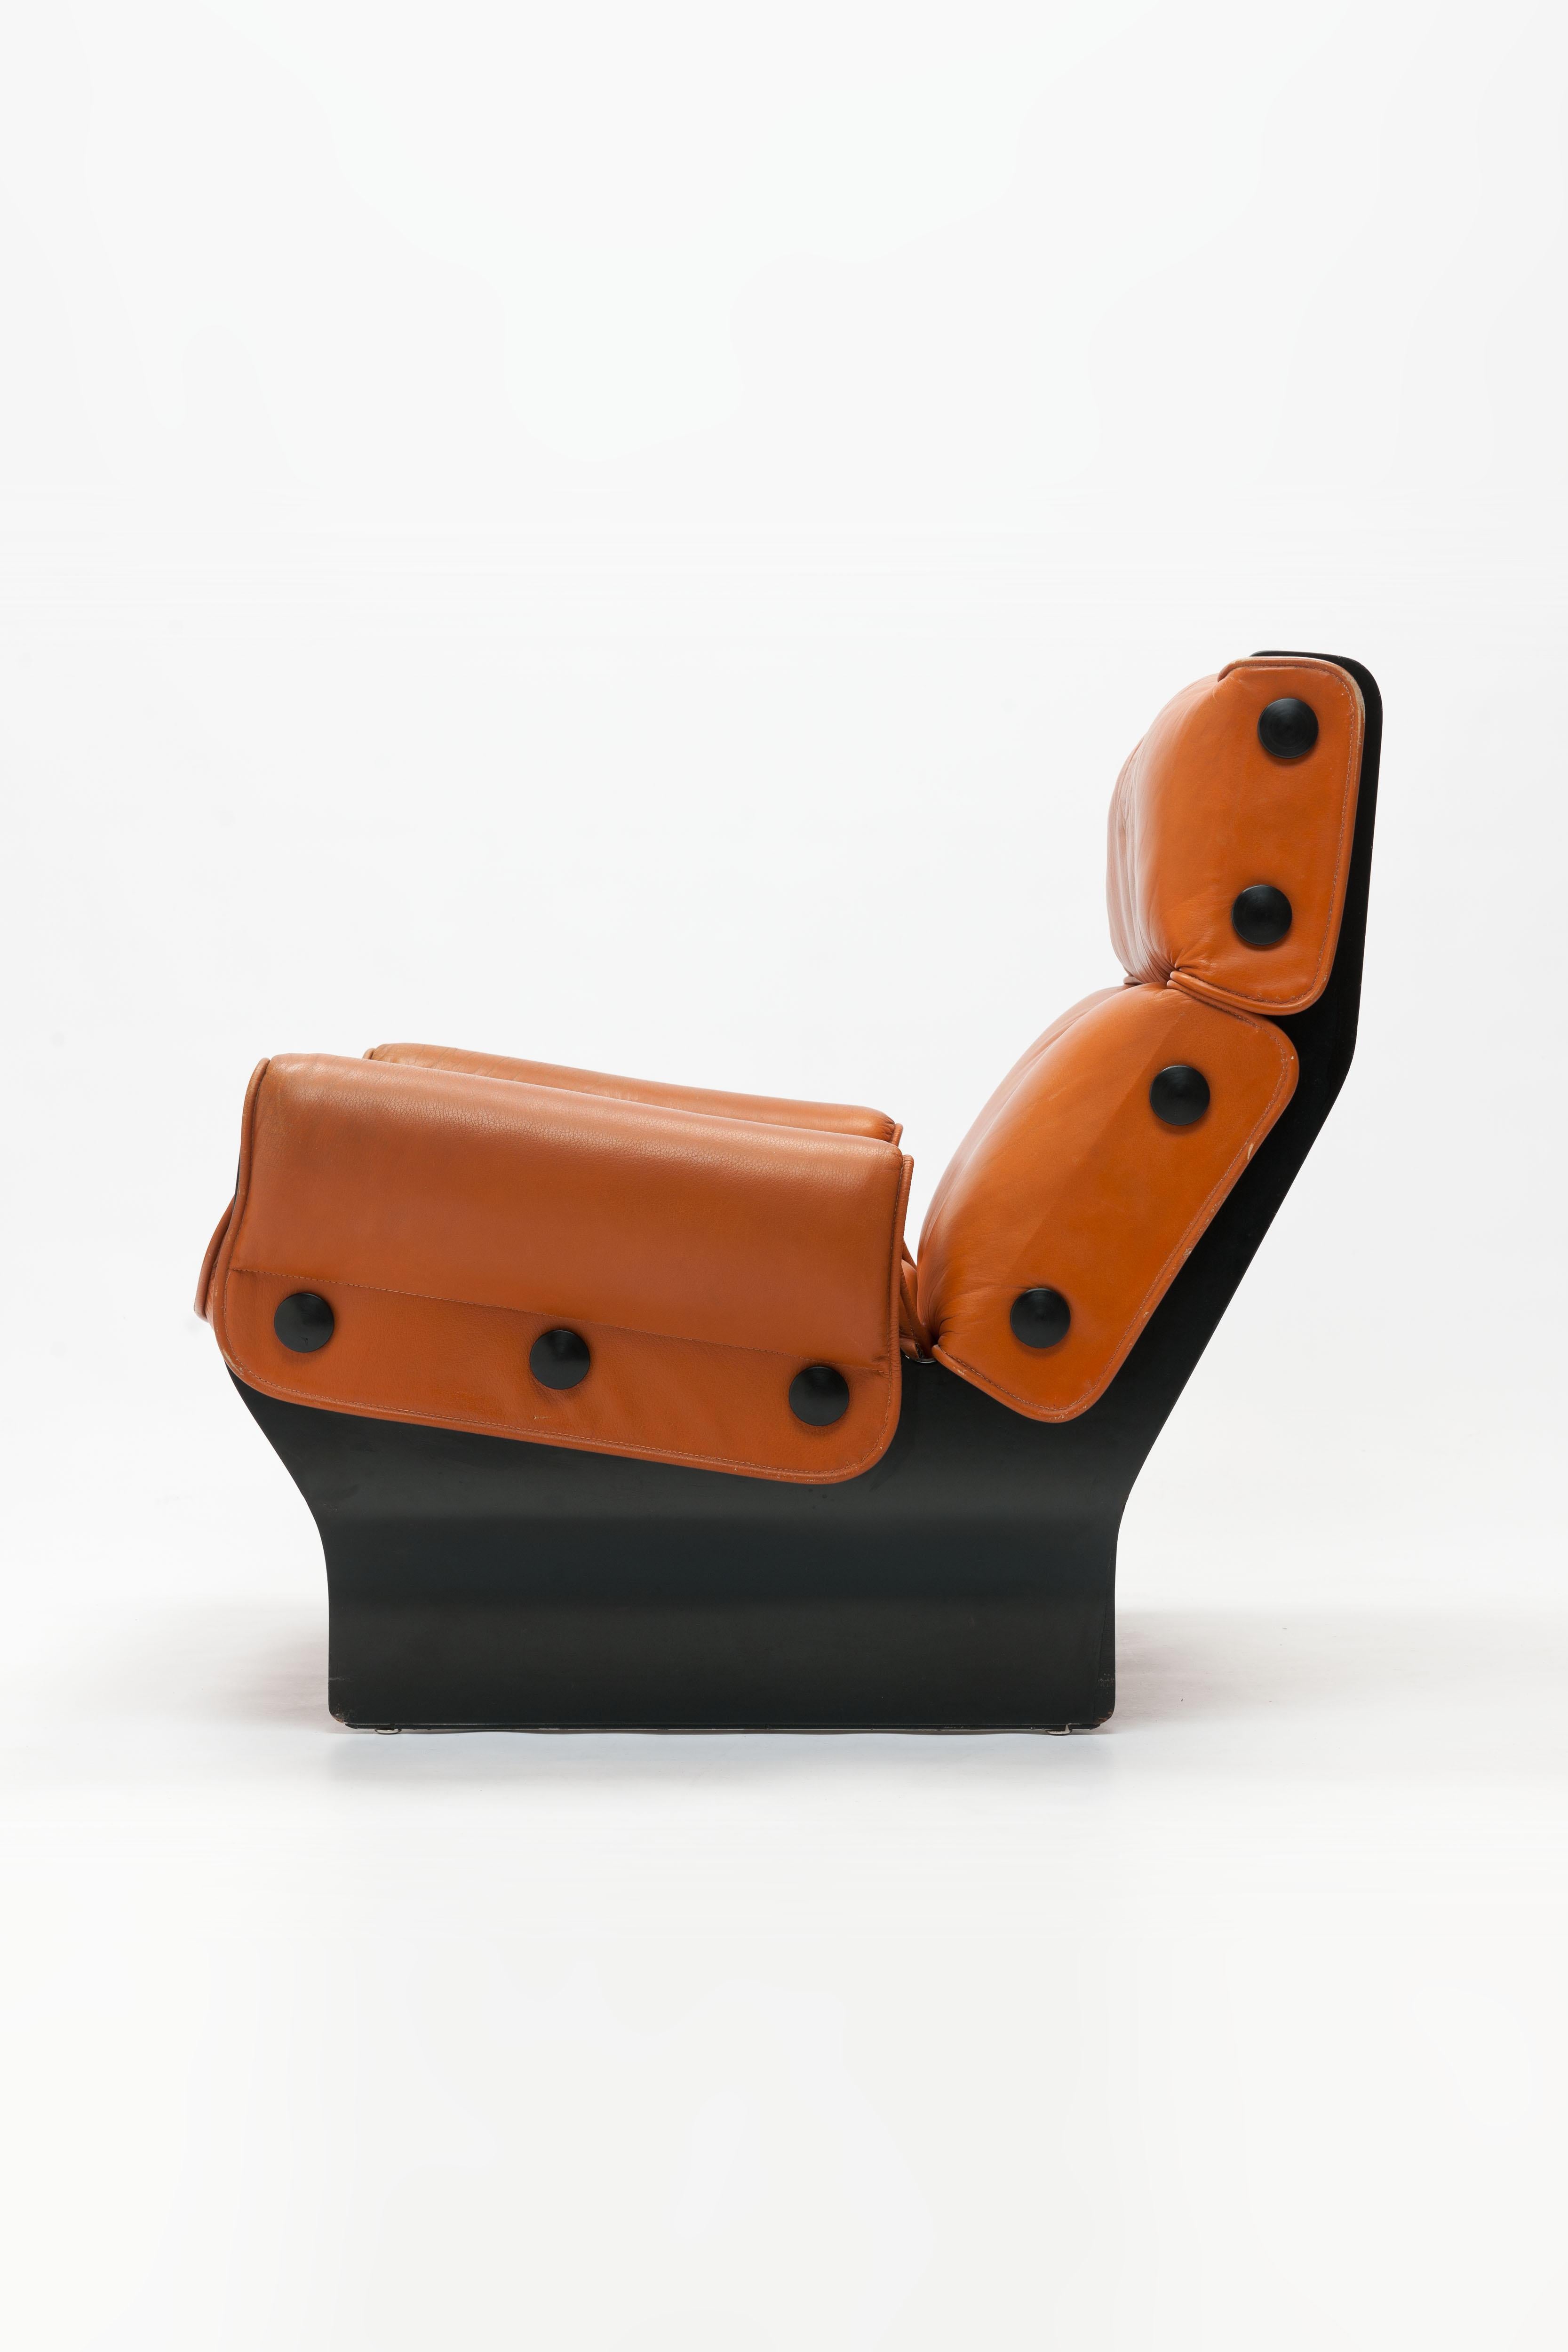 Osvaldo Borsani 'Canada' Lounge Chair by Tecno in Original Leather 10